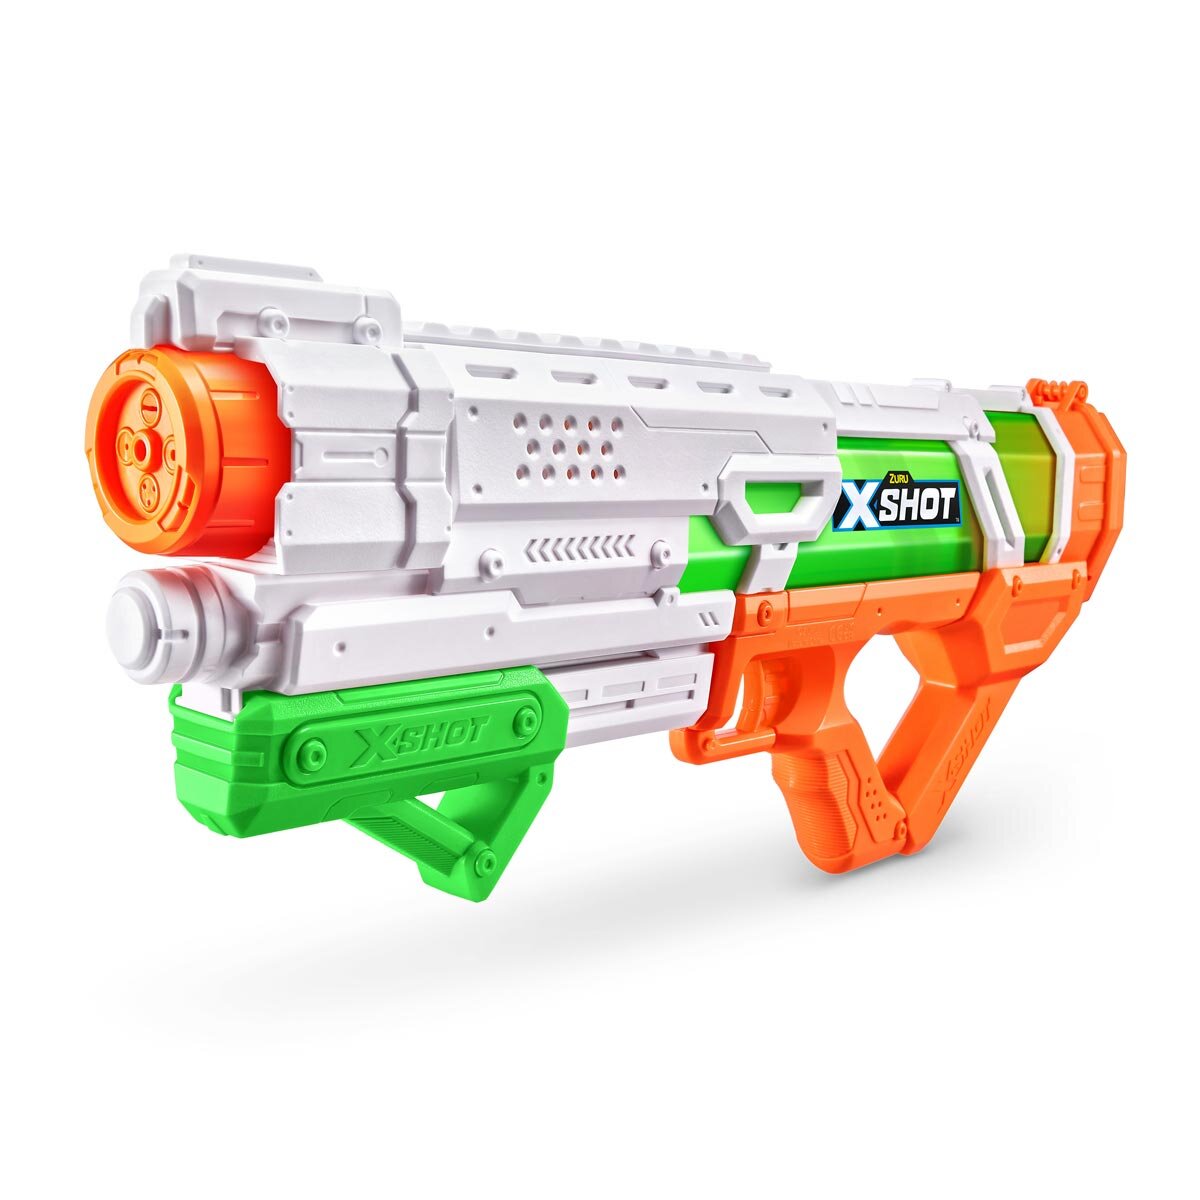 Buy Zuru X-Shot Water Blaster 2 Pack Feature2 Image at Costco.co.uk